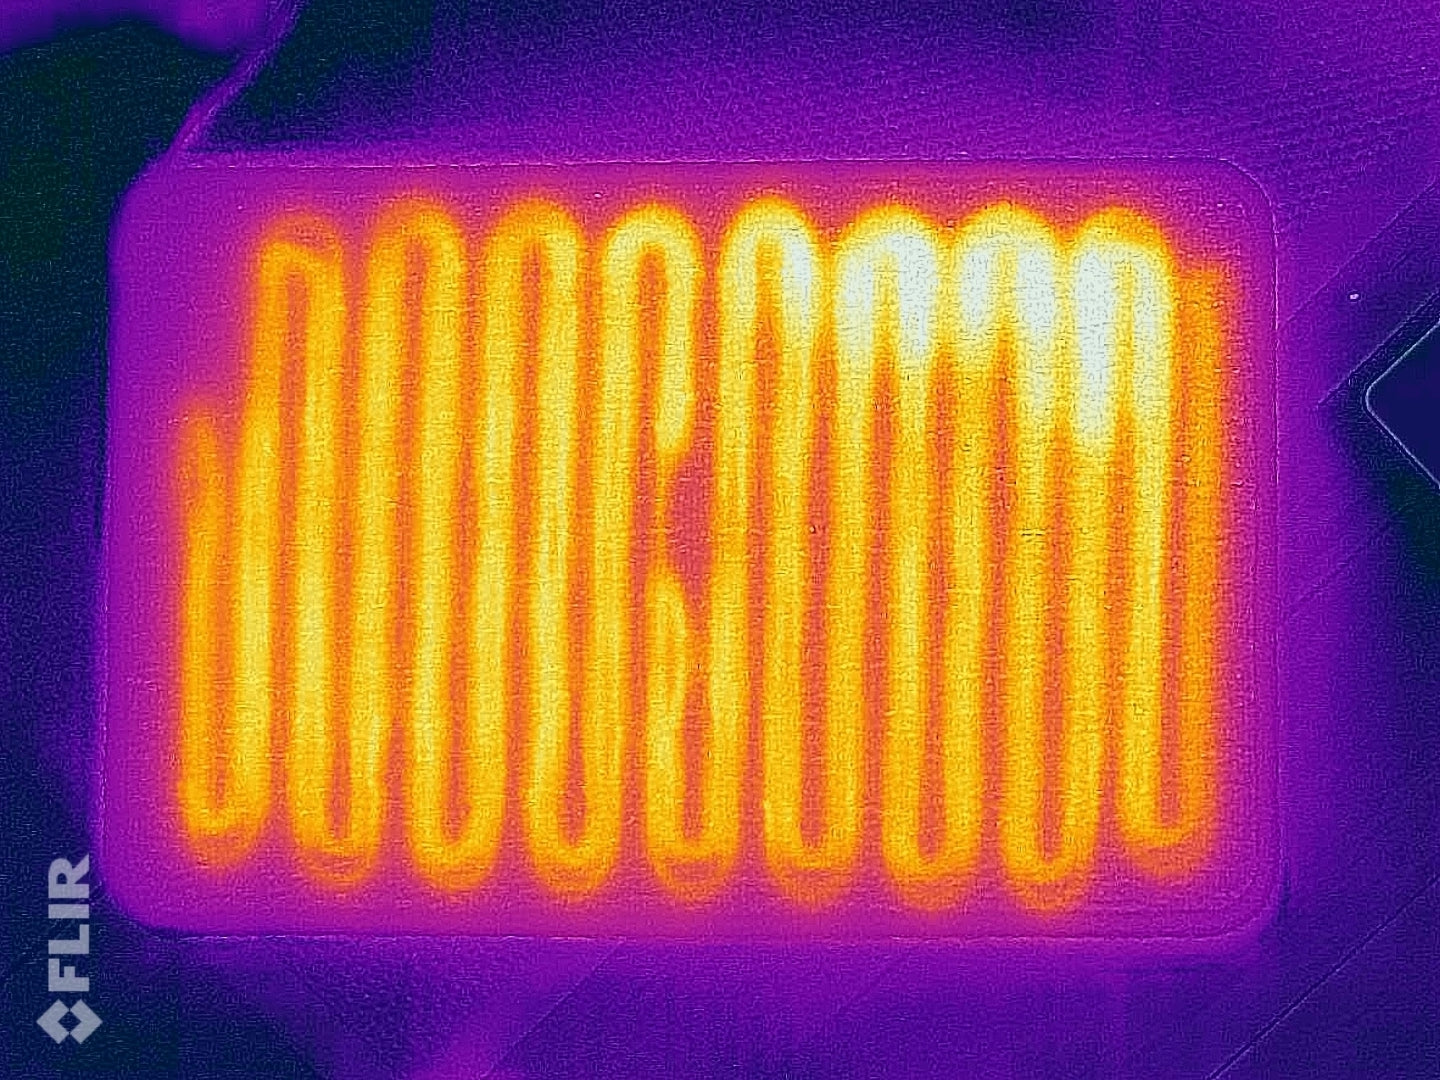 FLIR Sample Thermal Image